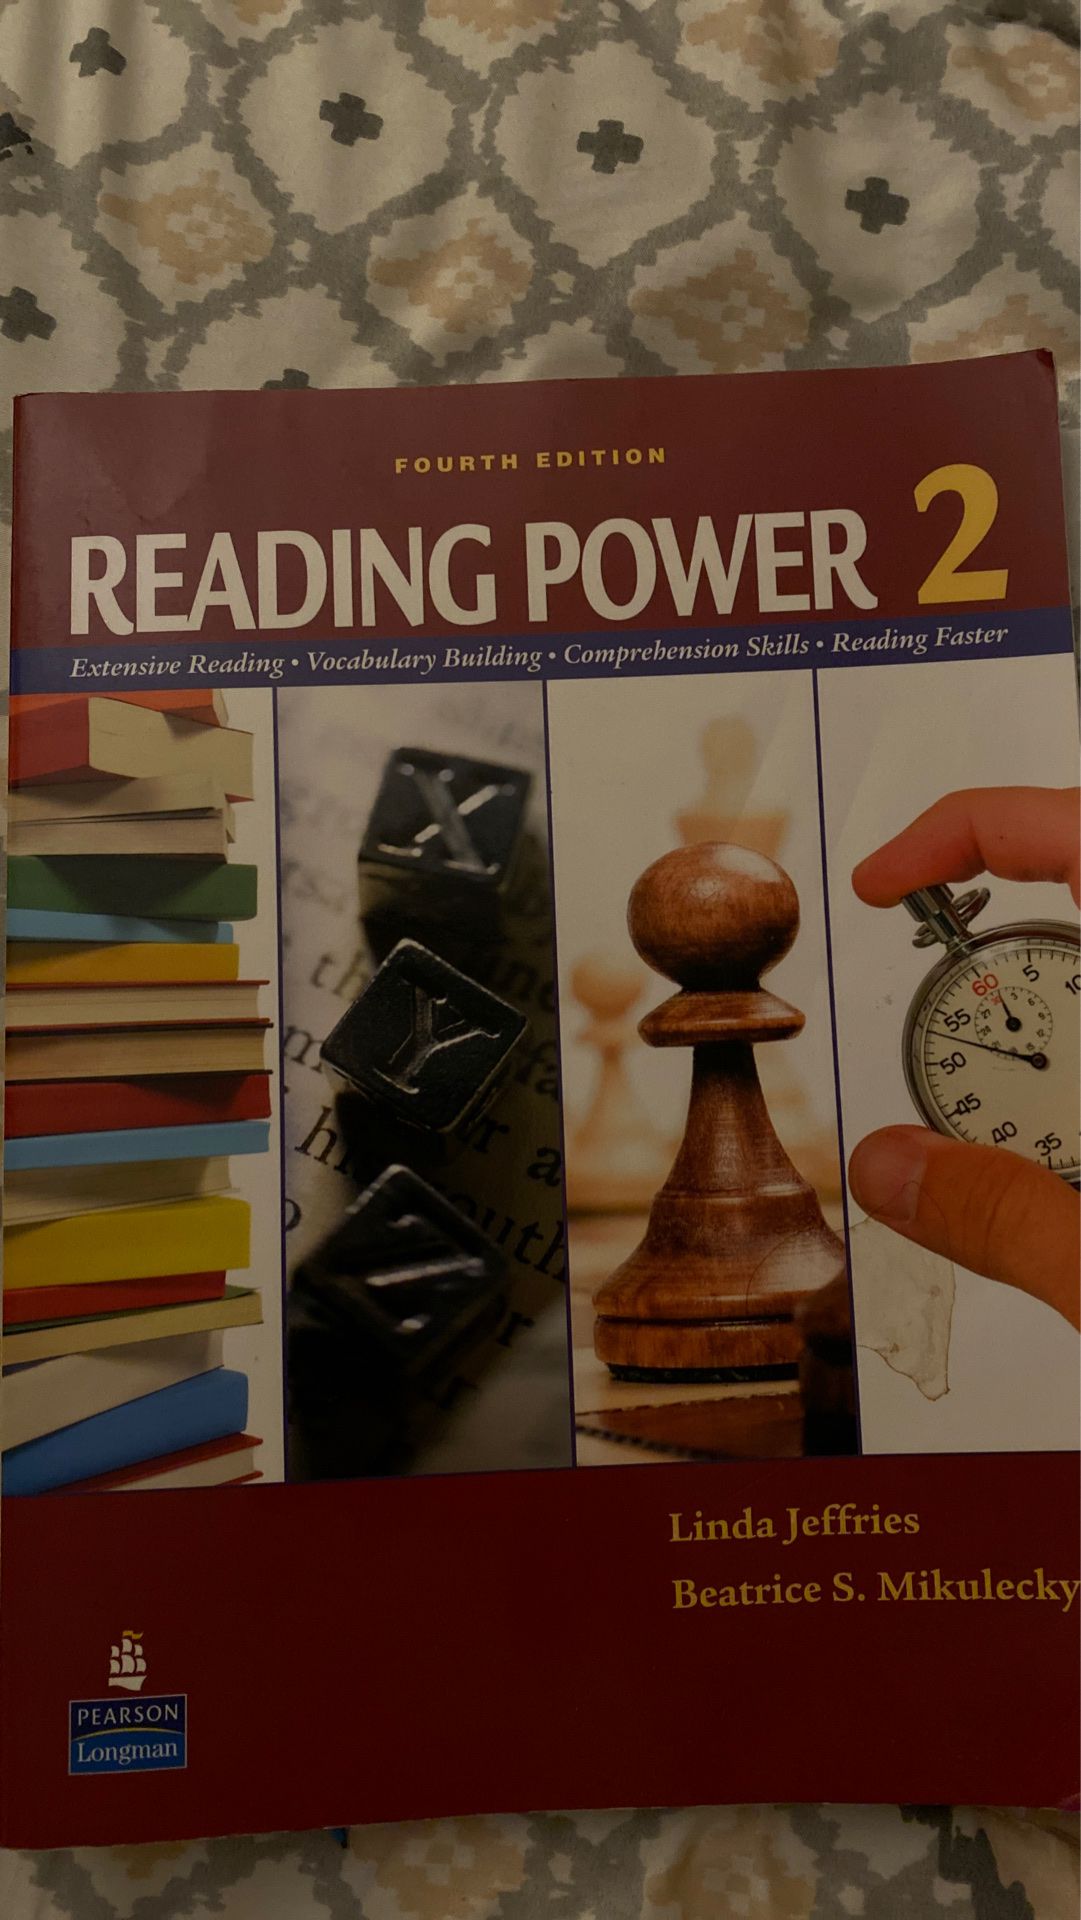 Reading power 2